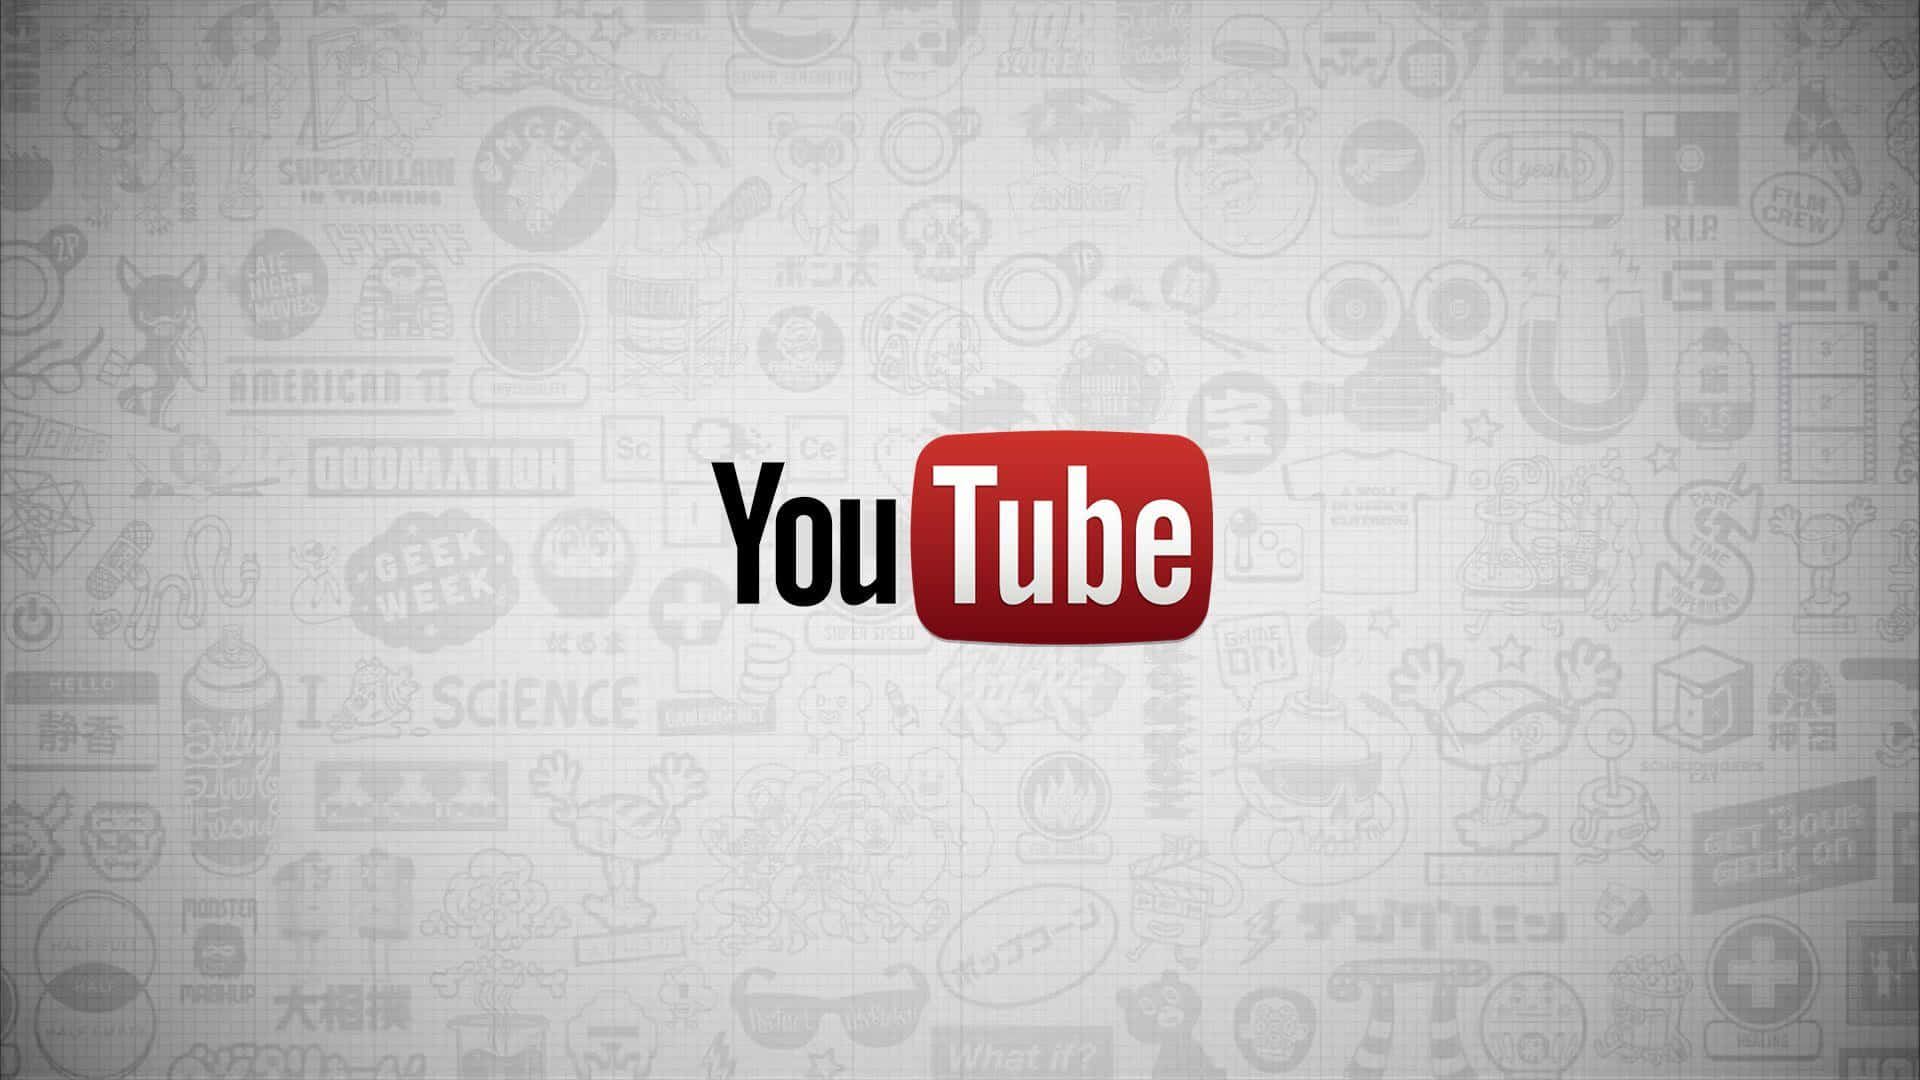 Logodi Youtube Vivace Su Sfondo Scuro